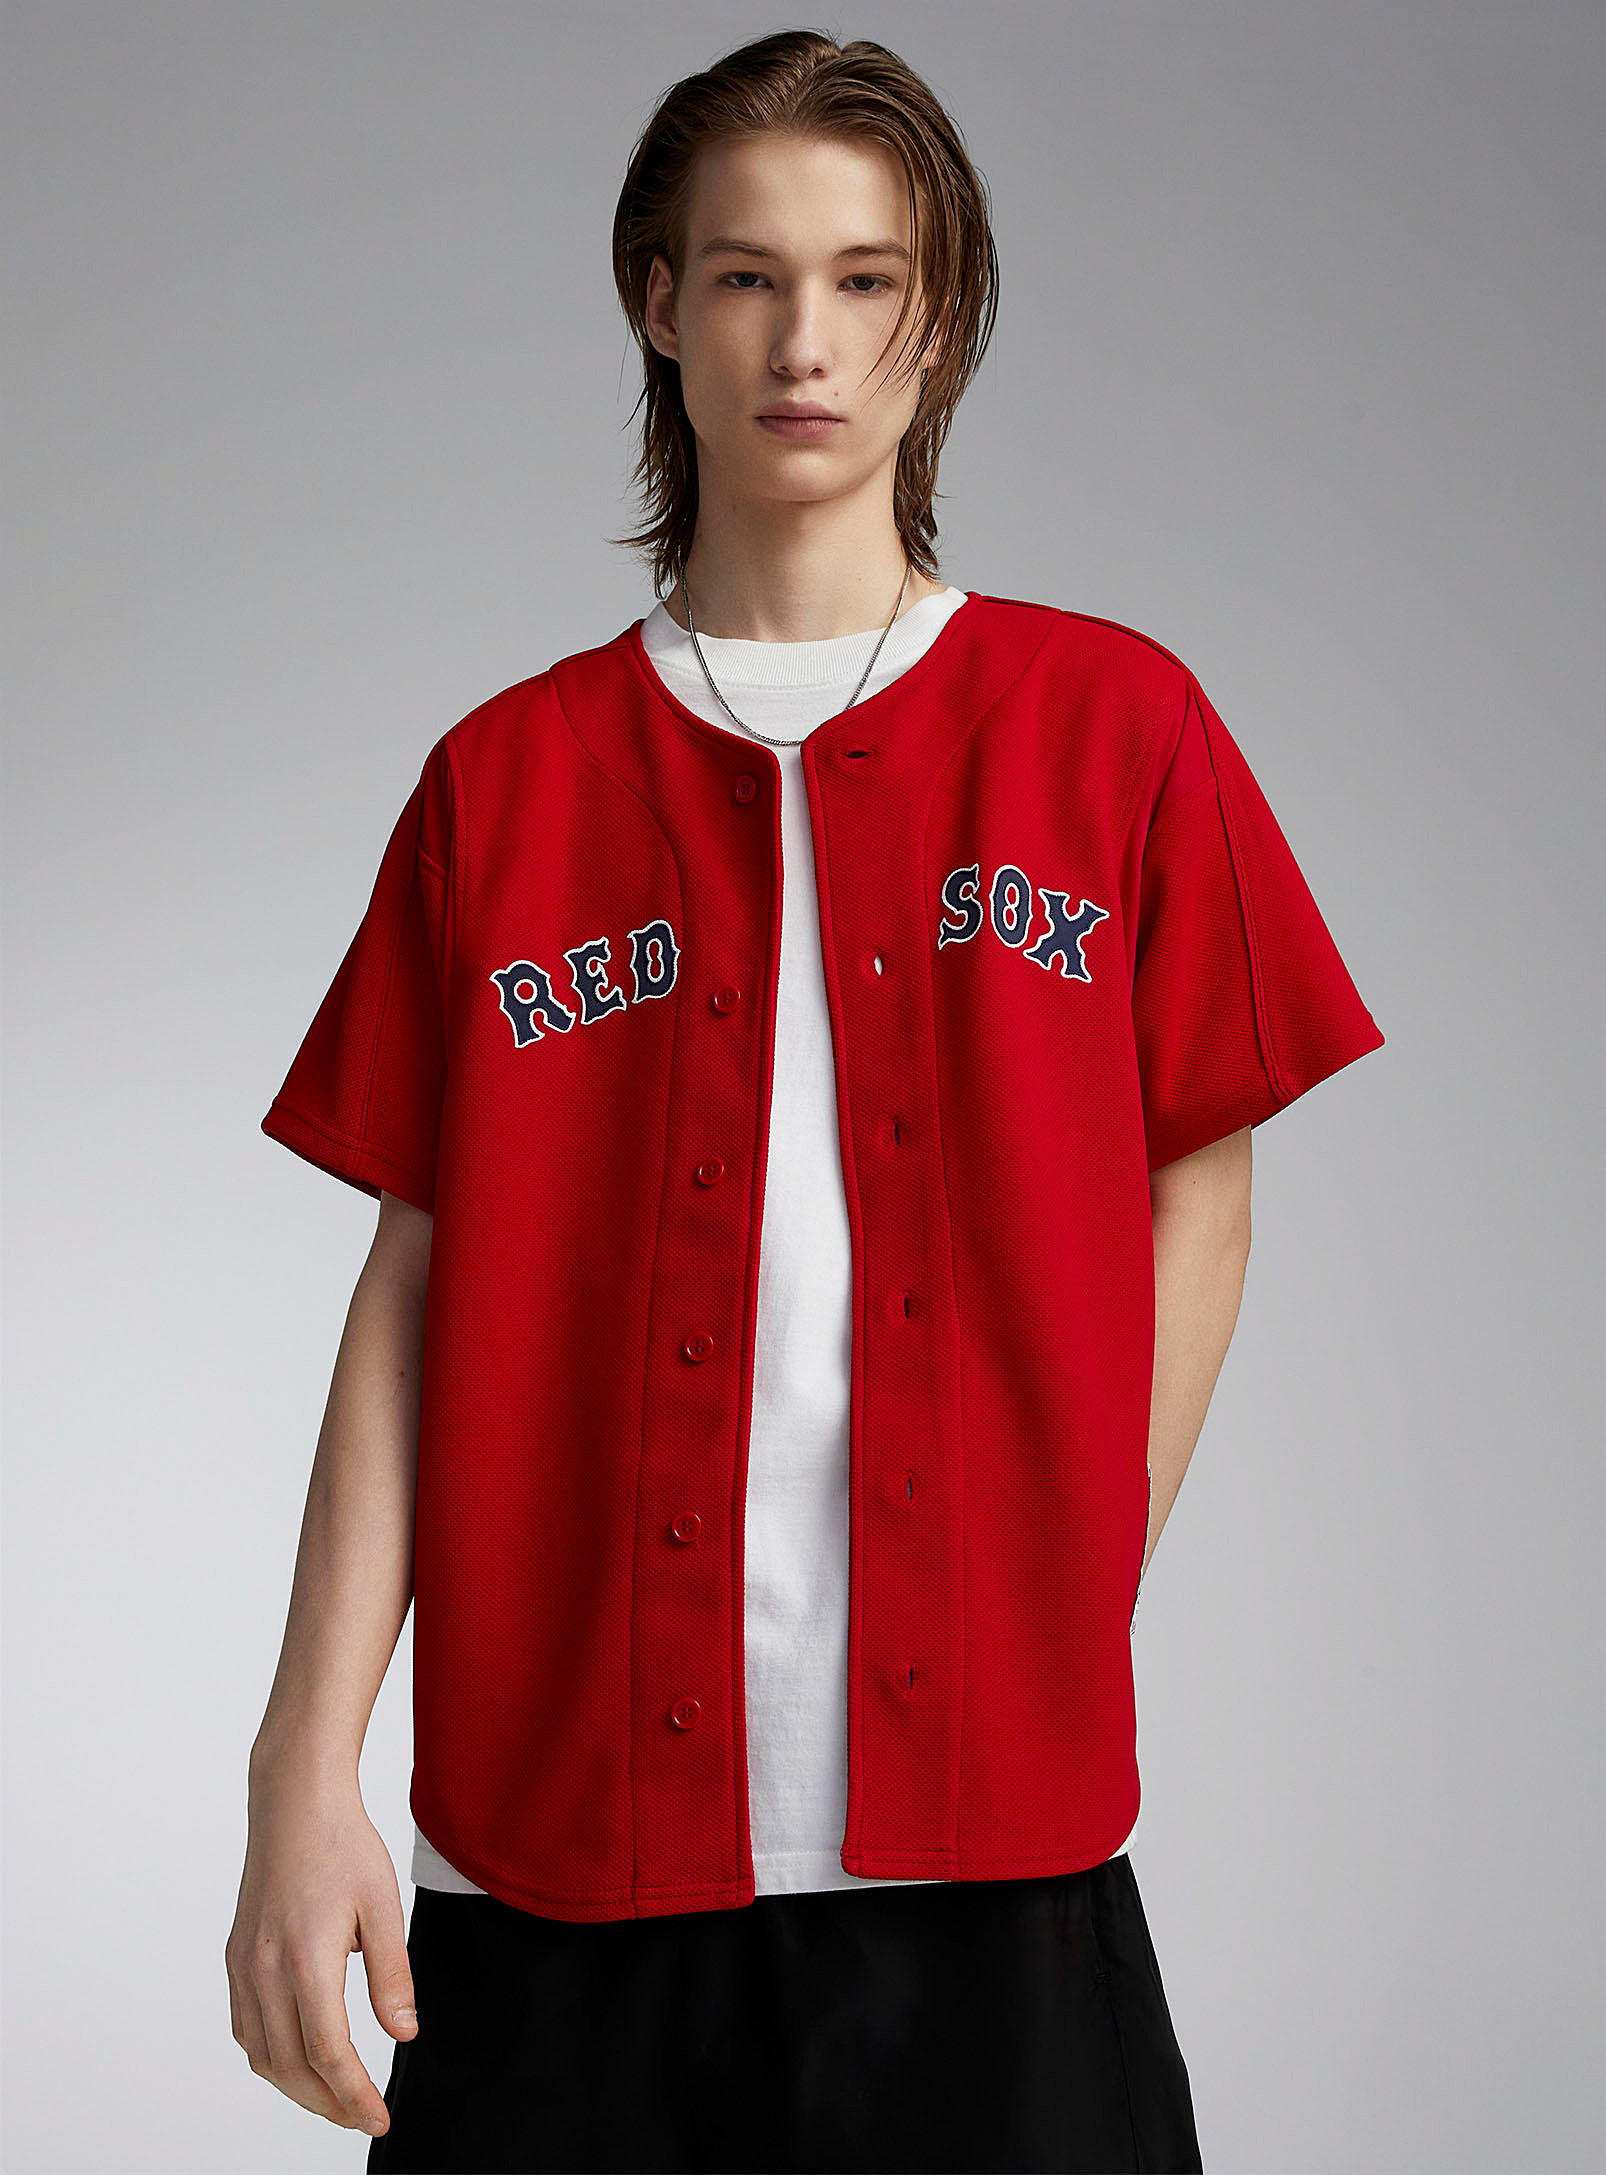 Mitchell & Ness - Le jersey de baseball David Ortiz